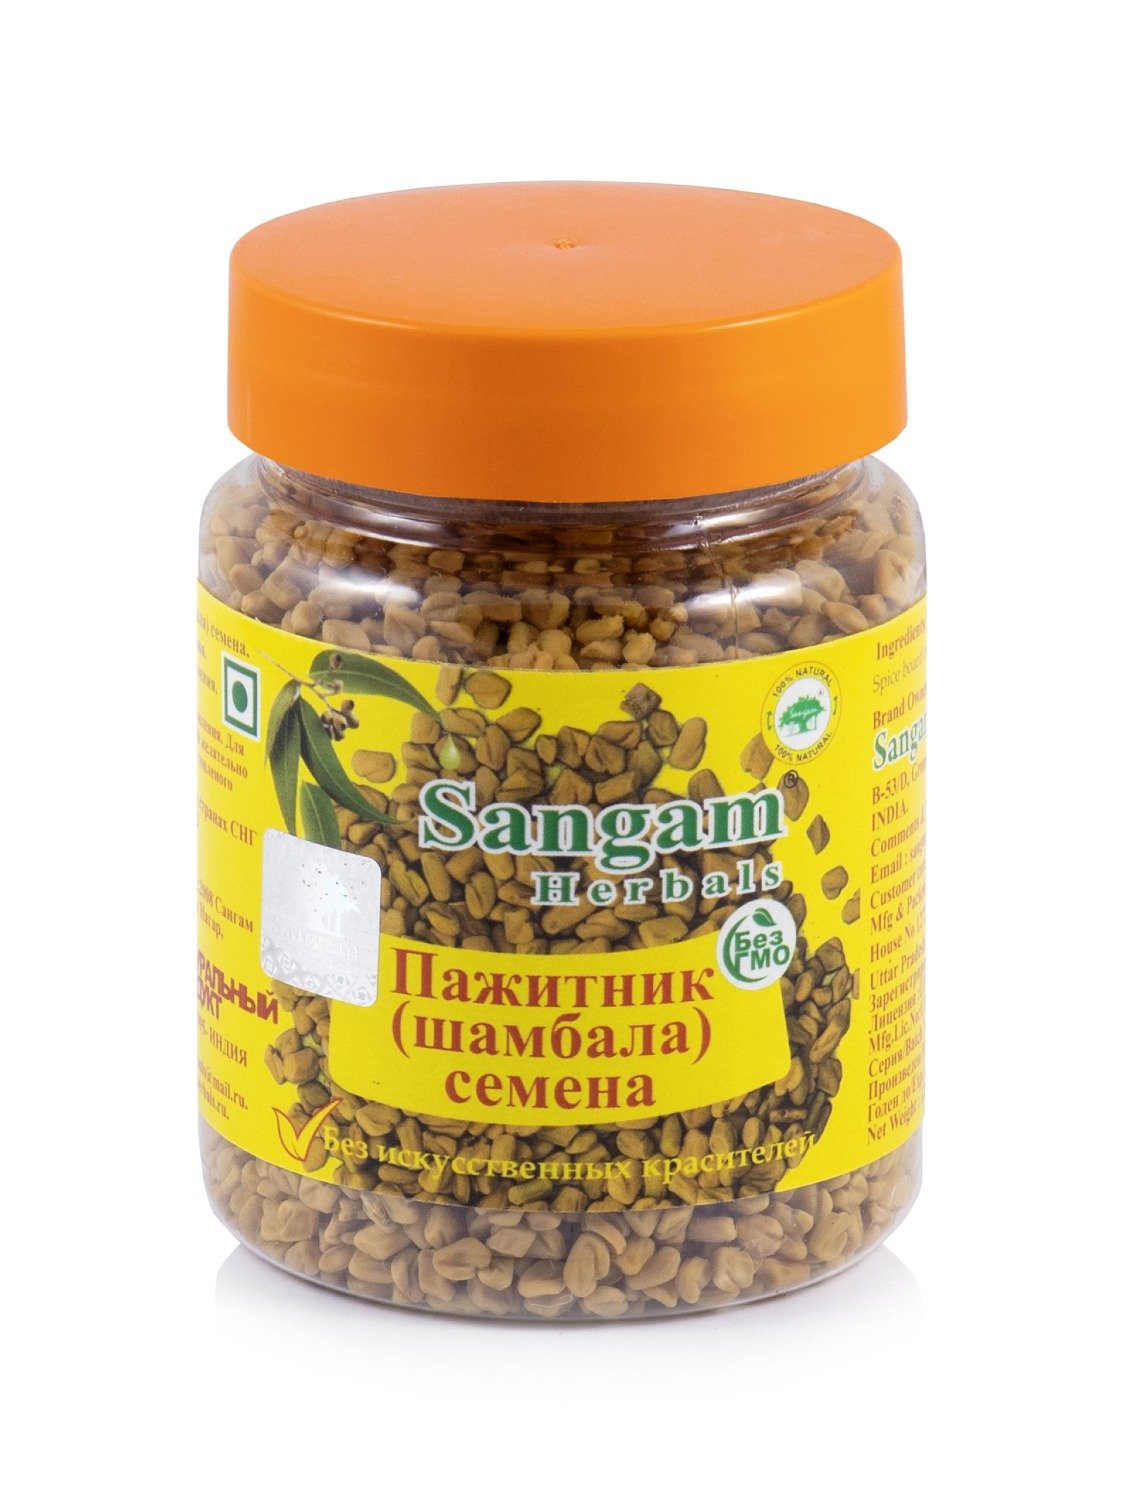 Купить Пажитник (Шамбала) семена Sangam Herbals (120 г) в интернет-магазине #store#